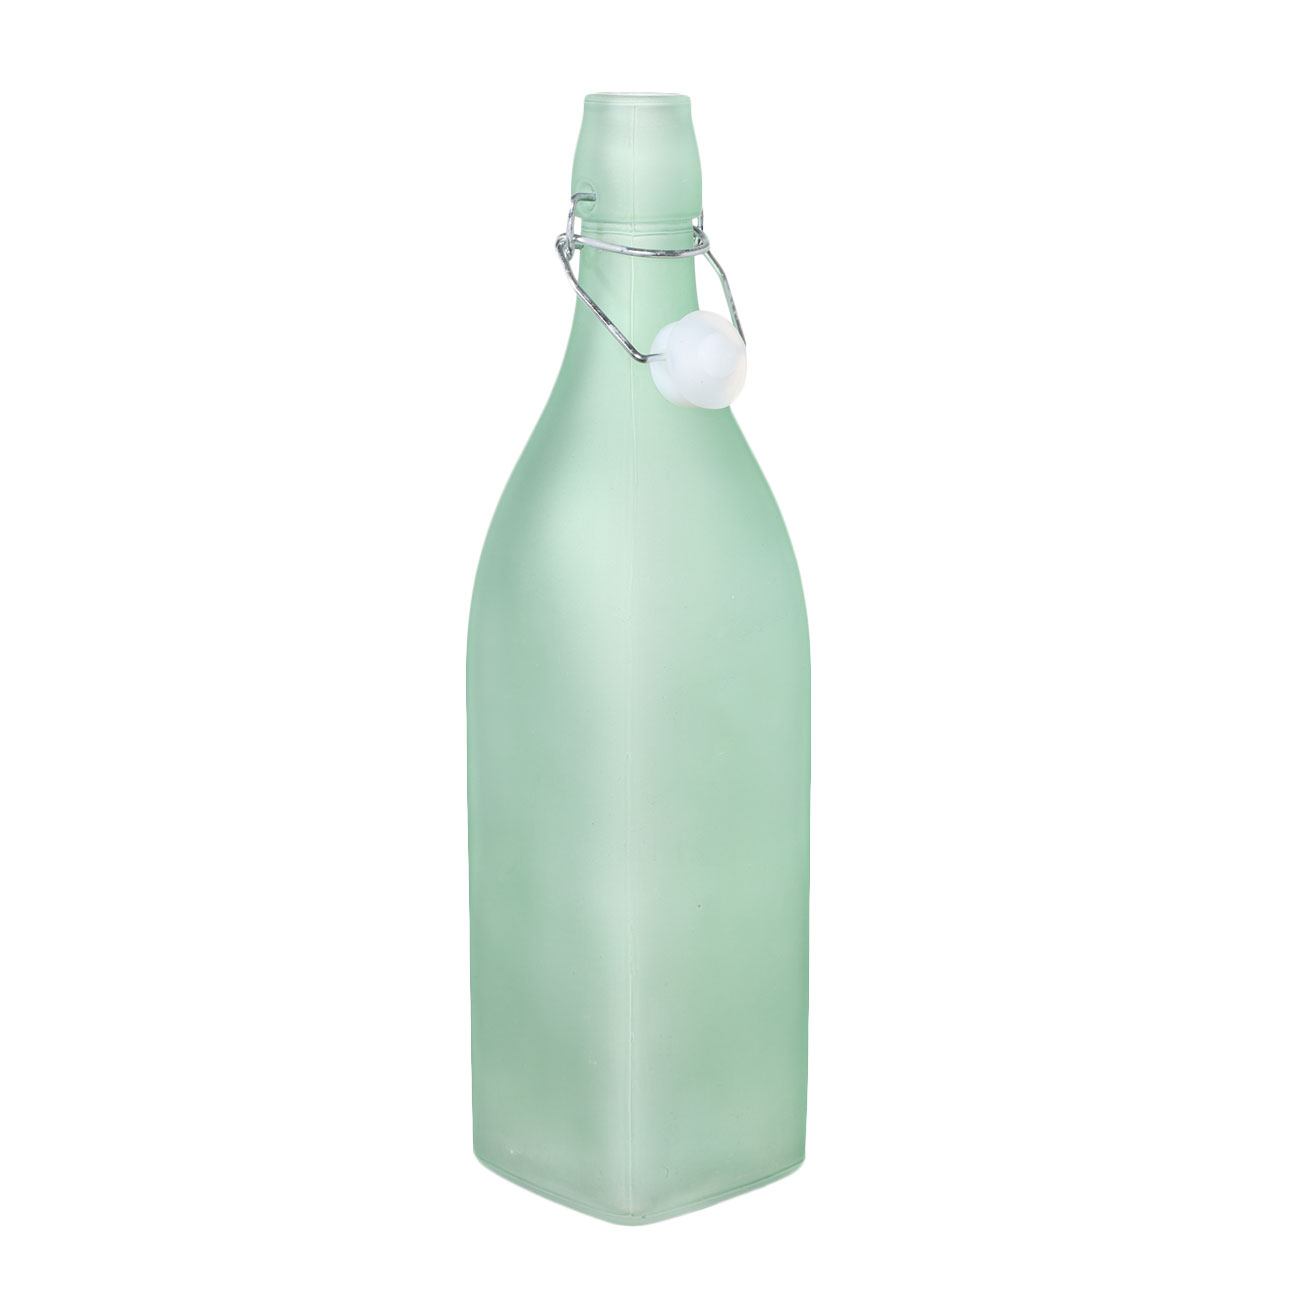 Oil or vinegar bottle, 500 ml, with clip, glass / metal, green, Light kitchen изображение № 2